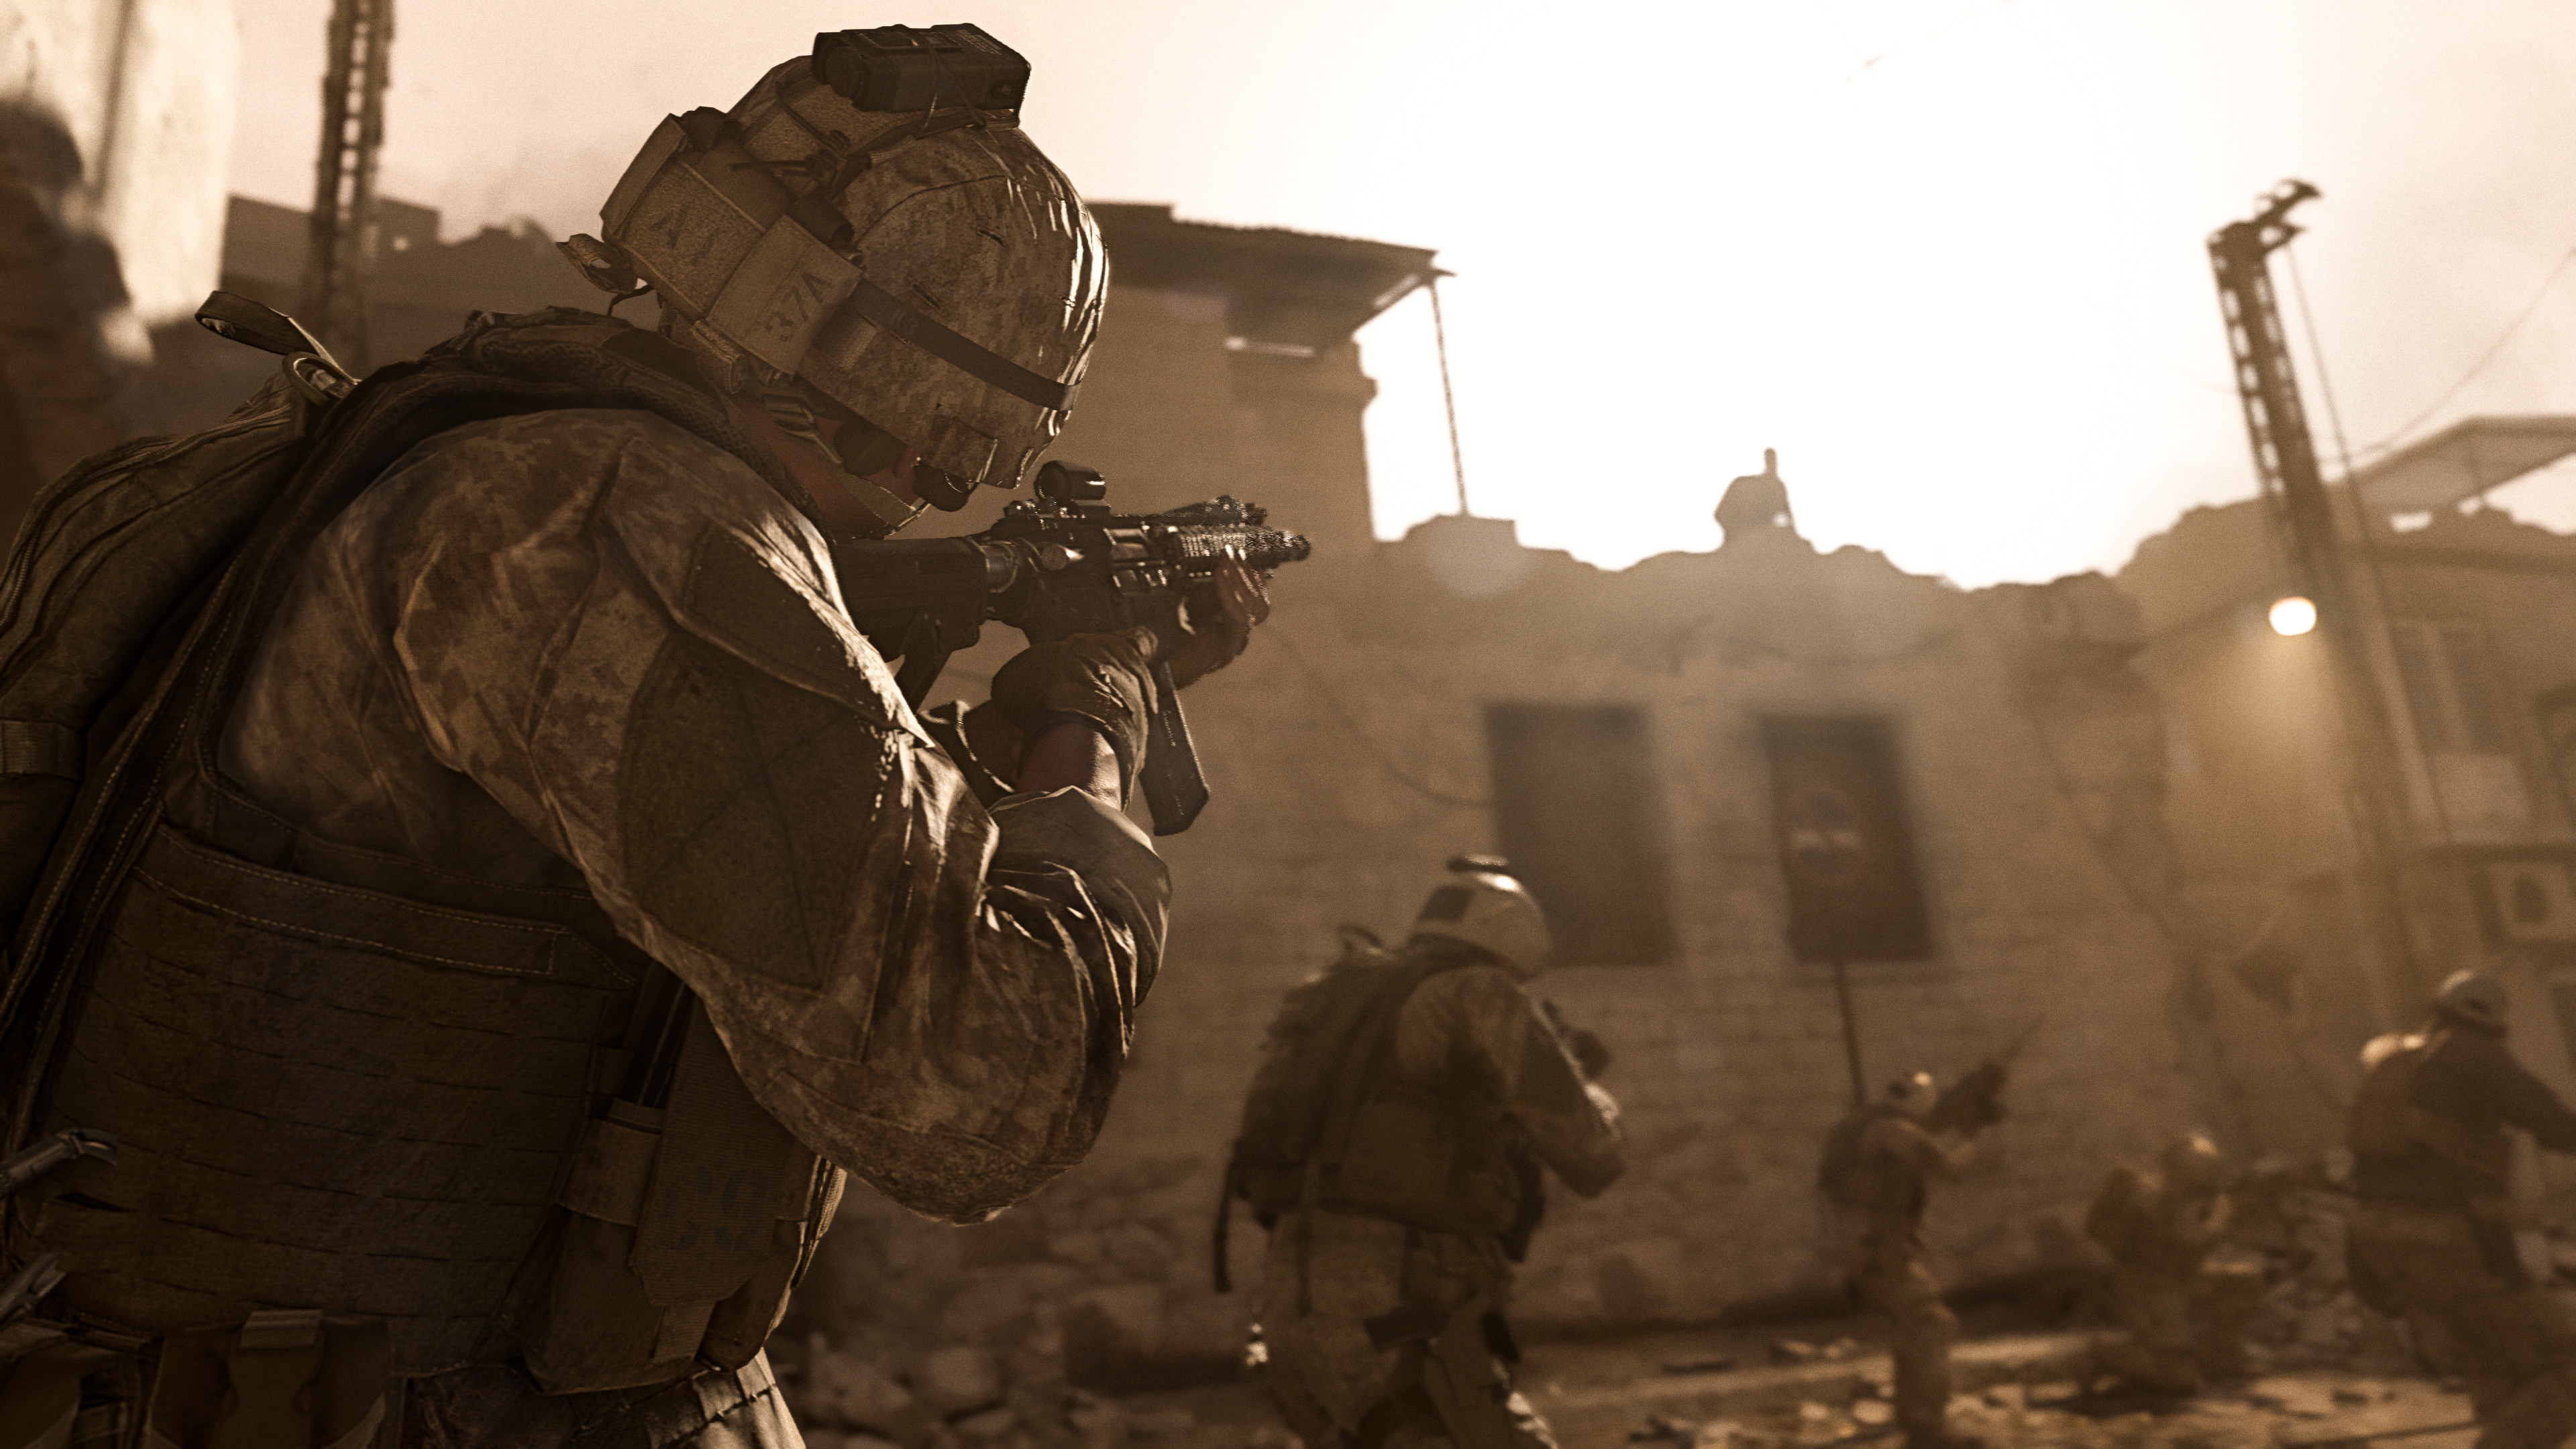 Call Of Duty Modern Warfare 3840x2160